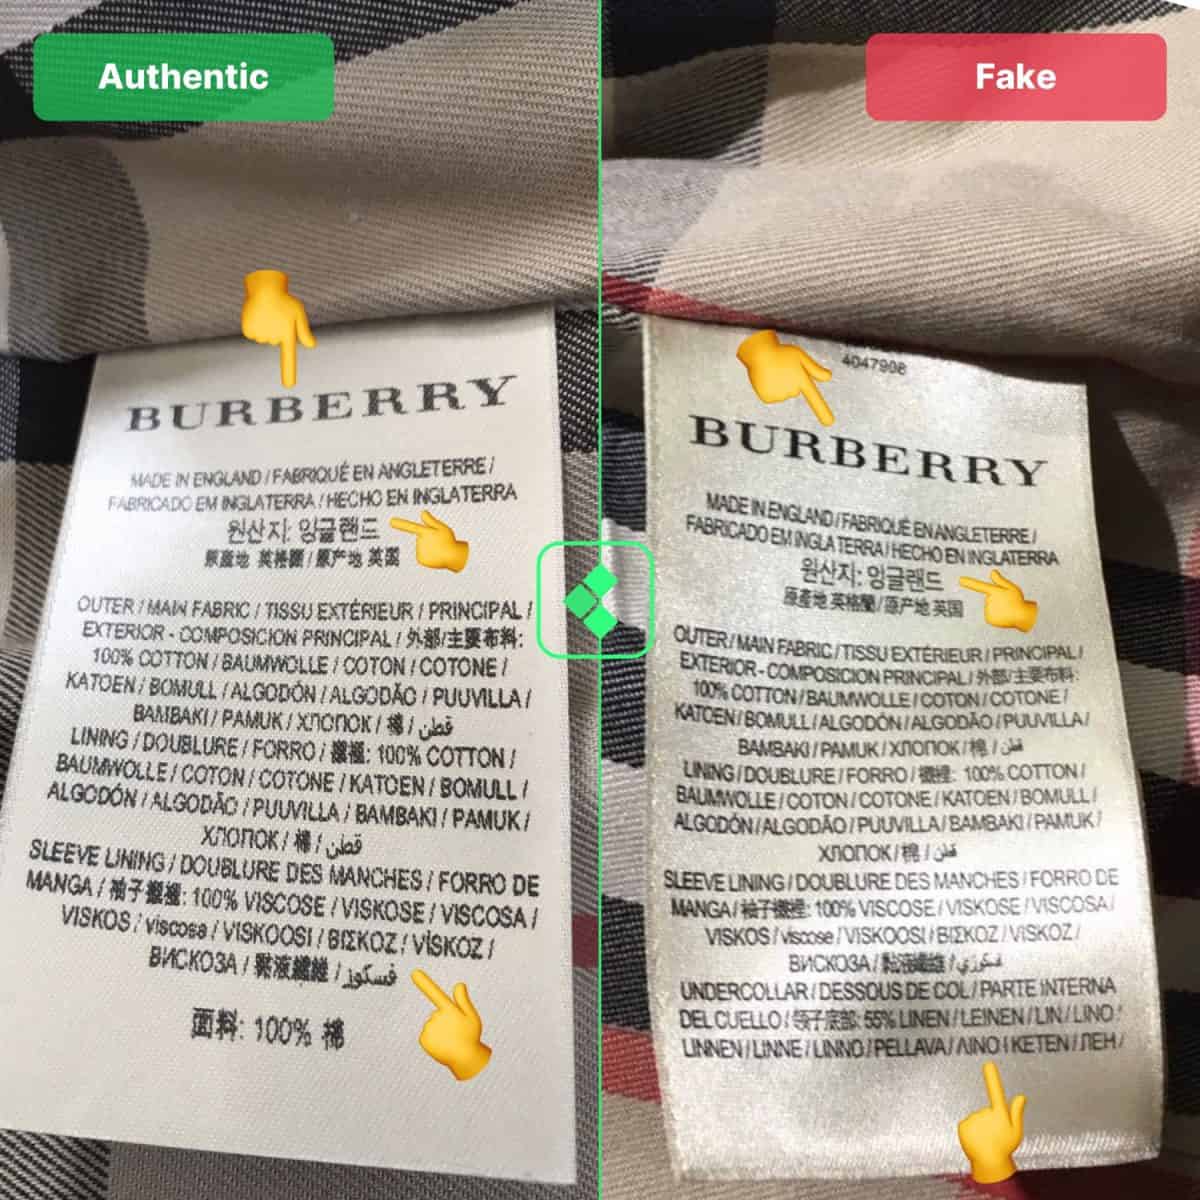 real vs fake burberry coats